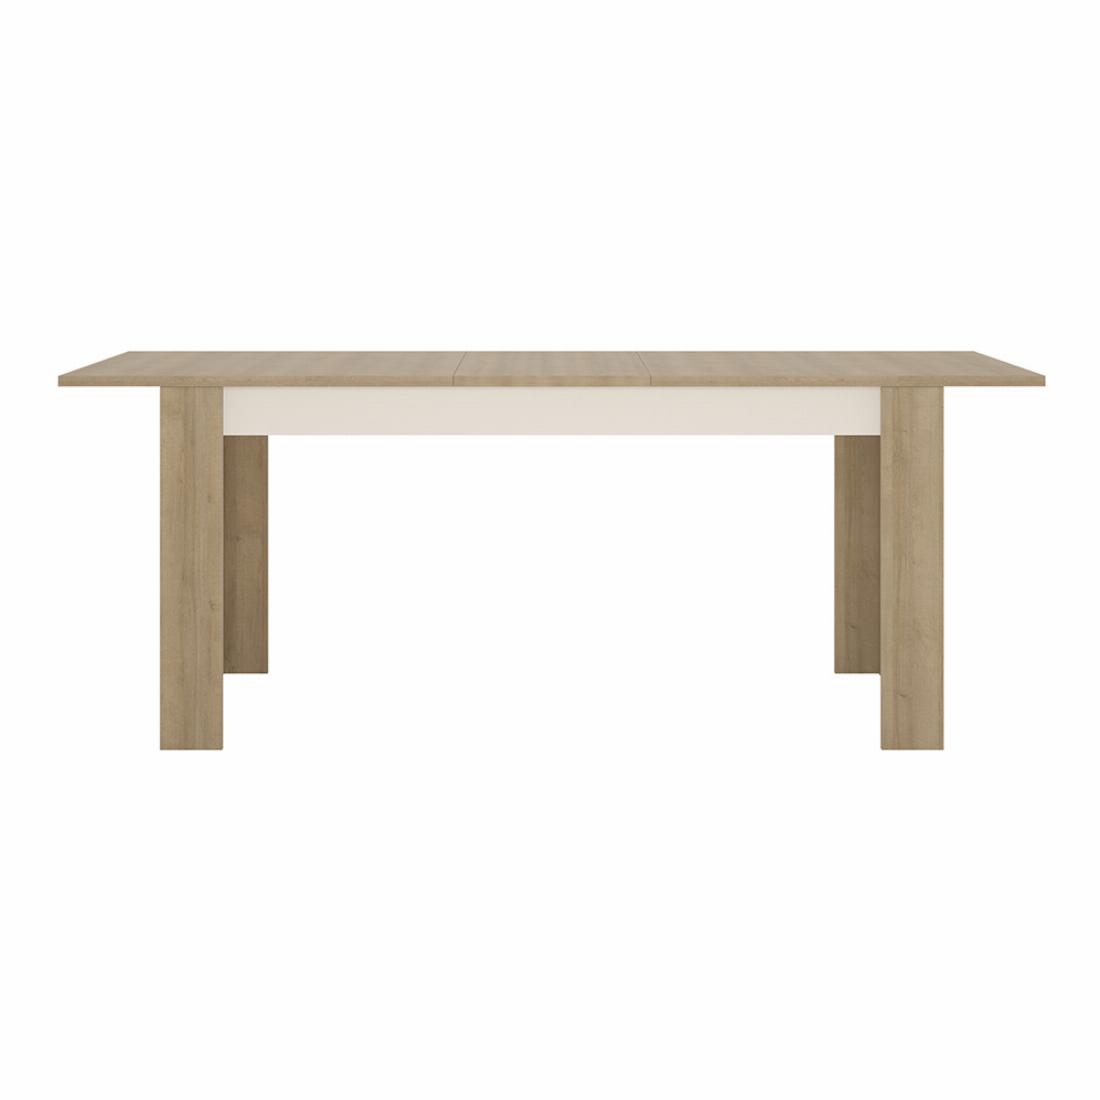 Lyon Large extending dining table 160200 cm